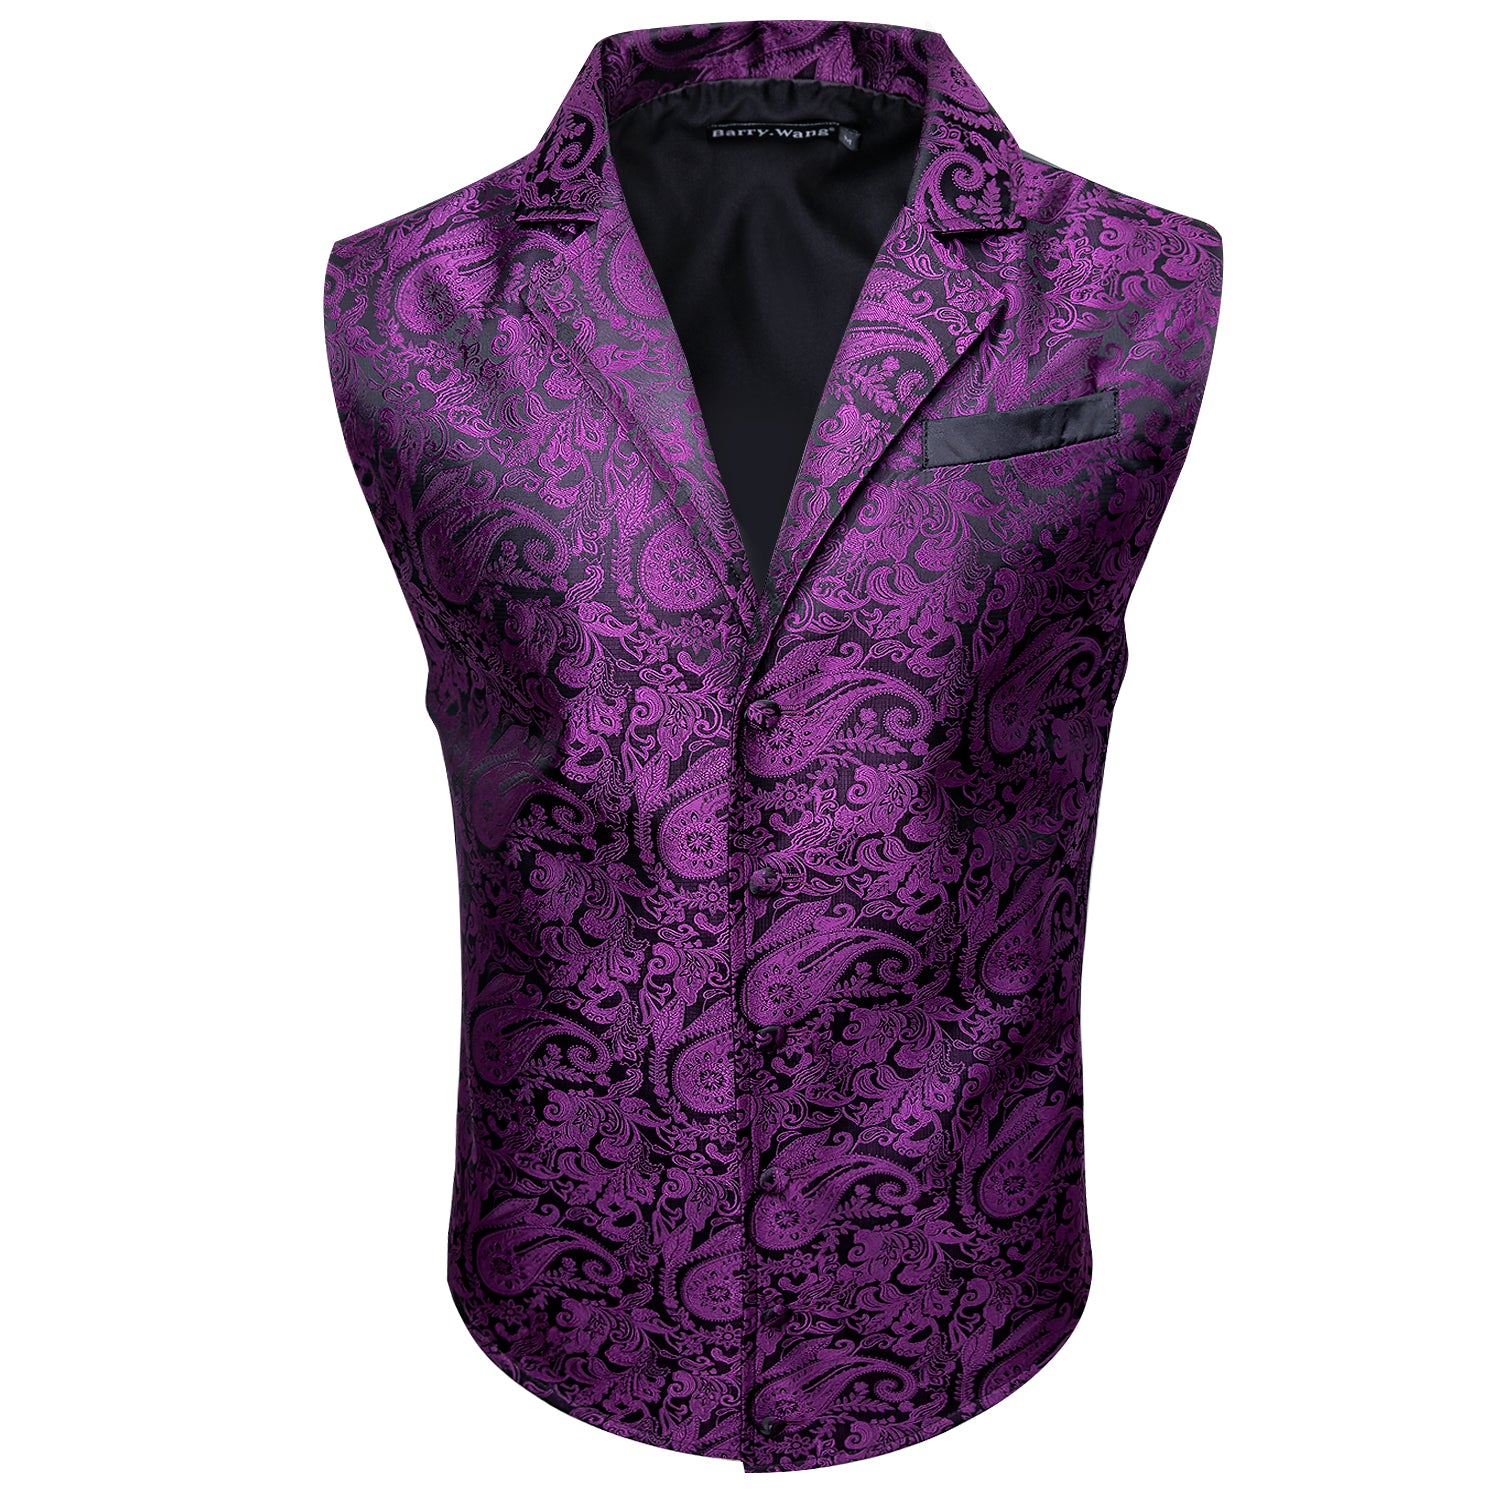 Barry.wang Men's Vest Novelty Purple Paisley Silk Tuxedo Vest Hot